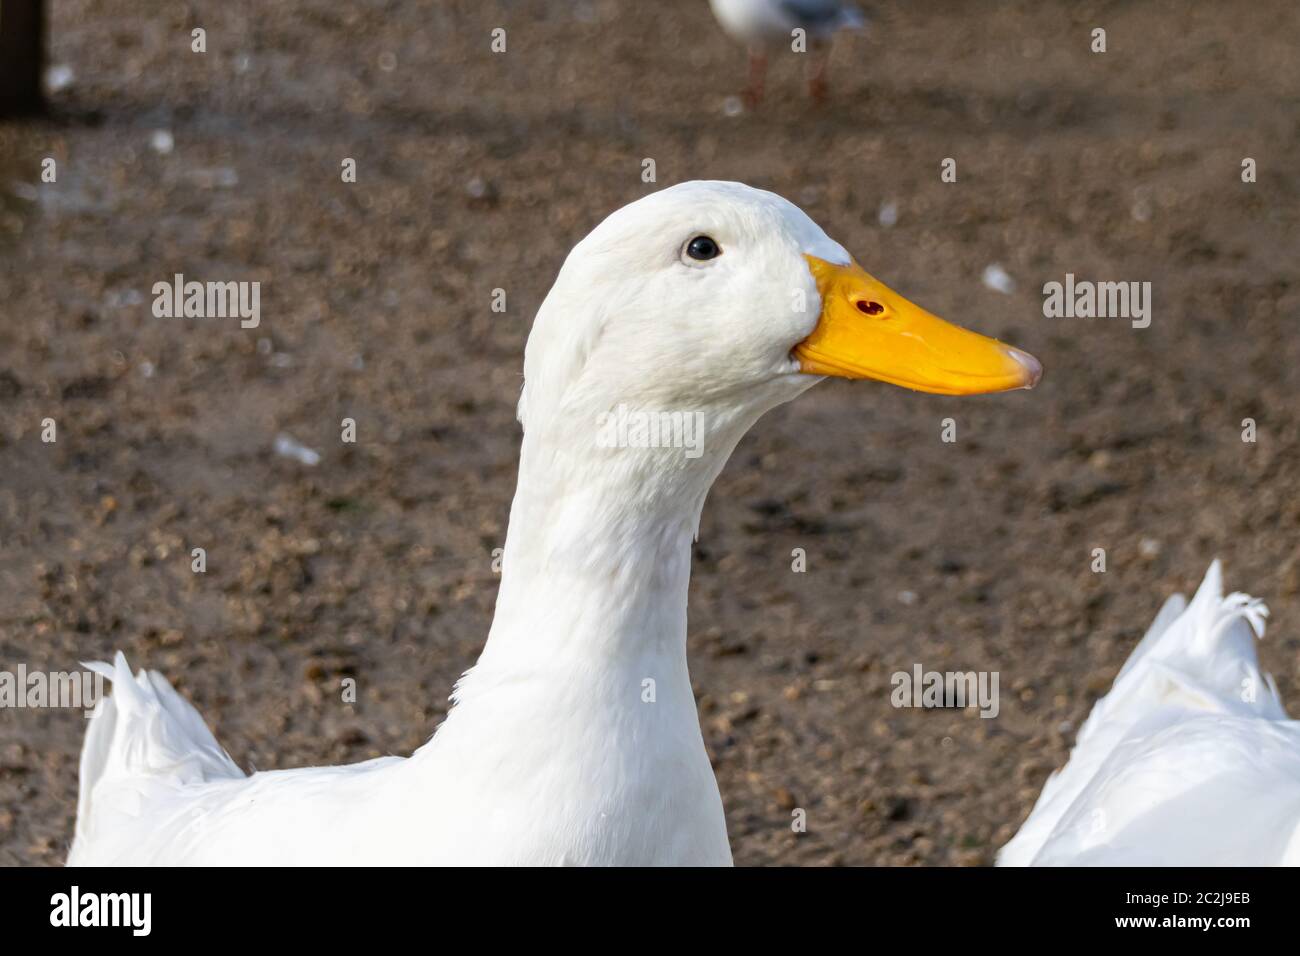 Portrait of a white pekin duck Stock Photo